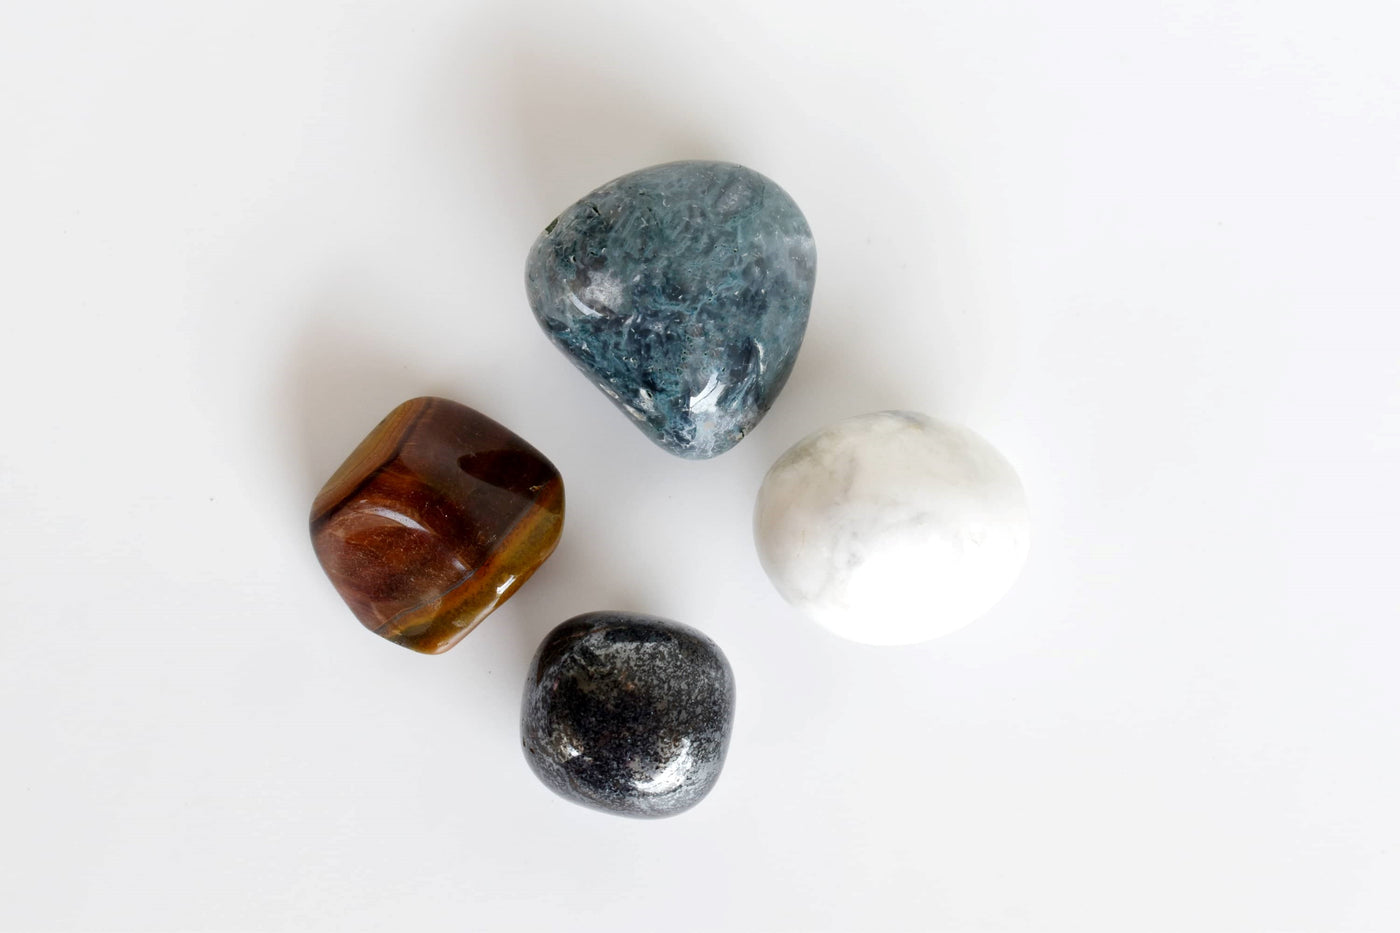 GEMINI Zodiac Crystal Kit, Gemini Birthstones Tumbled Stones Set, Gemini Gifts